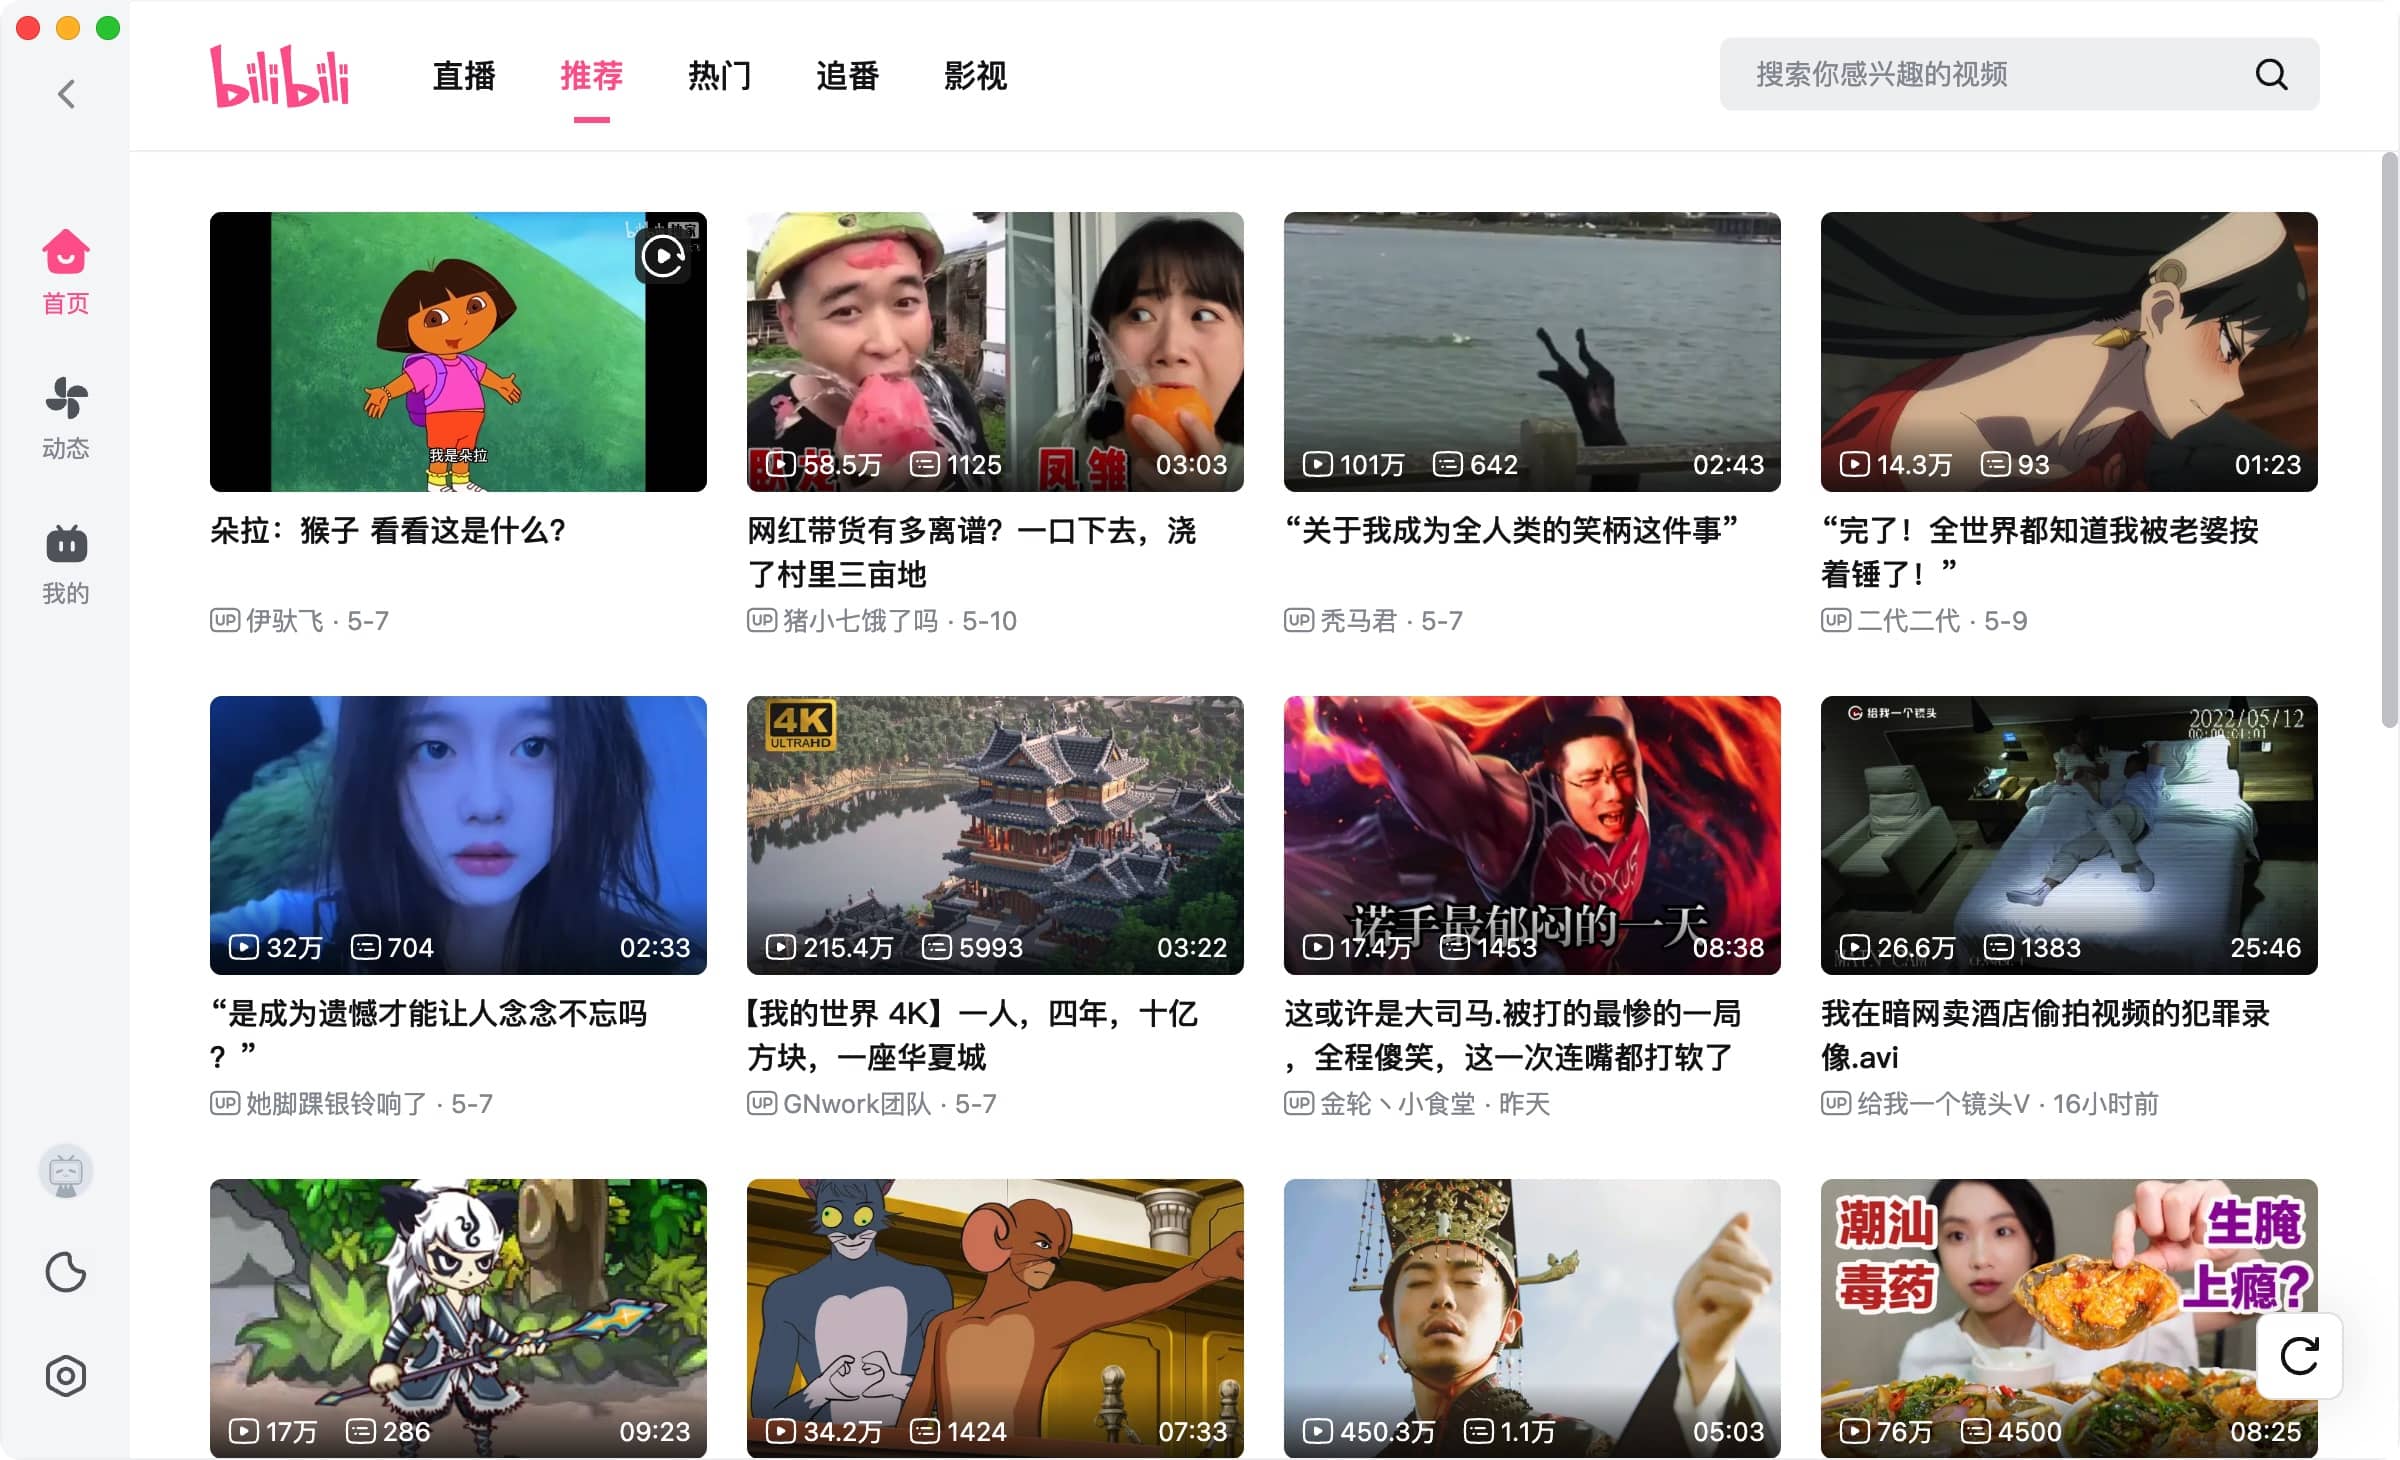 哔哩哔哩 for mac 1.6.1 中文版 Bilibili官方客户端